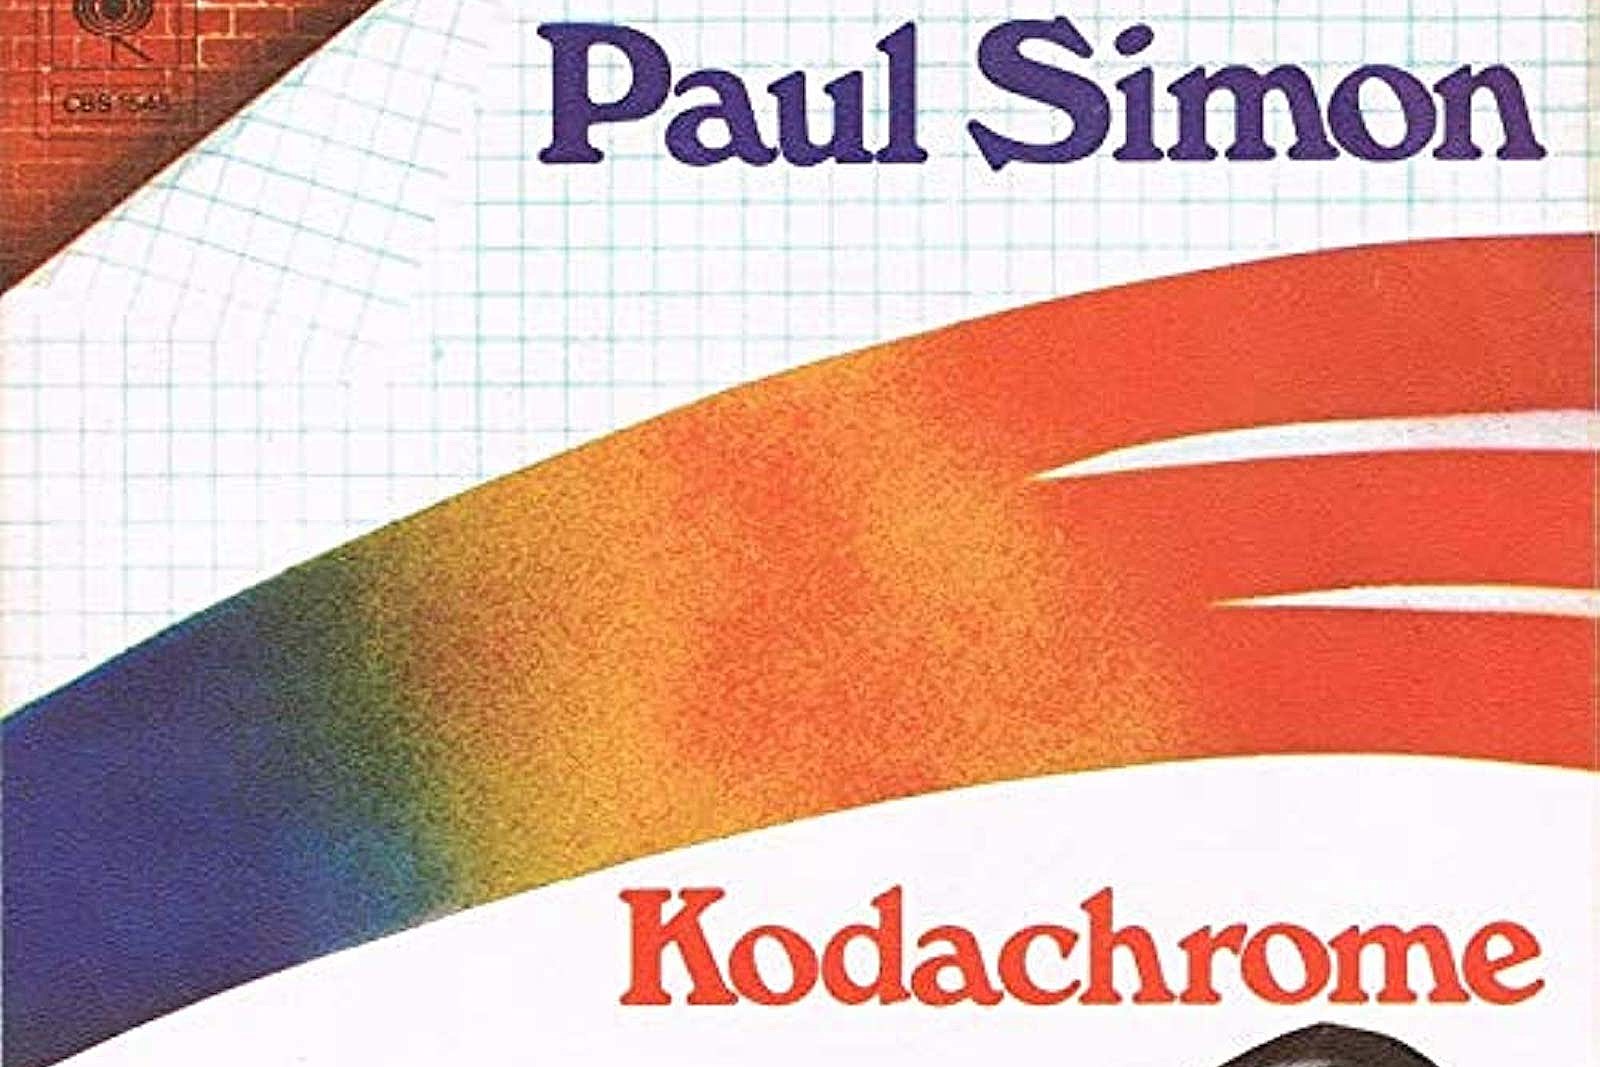 How Paul Simon Unexpectedly Recorded ‘Kodachrome’